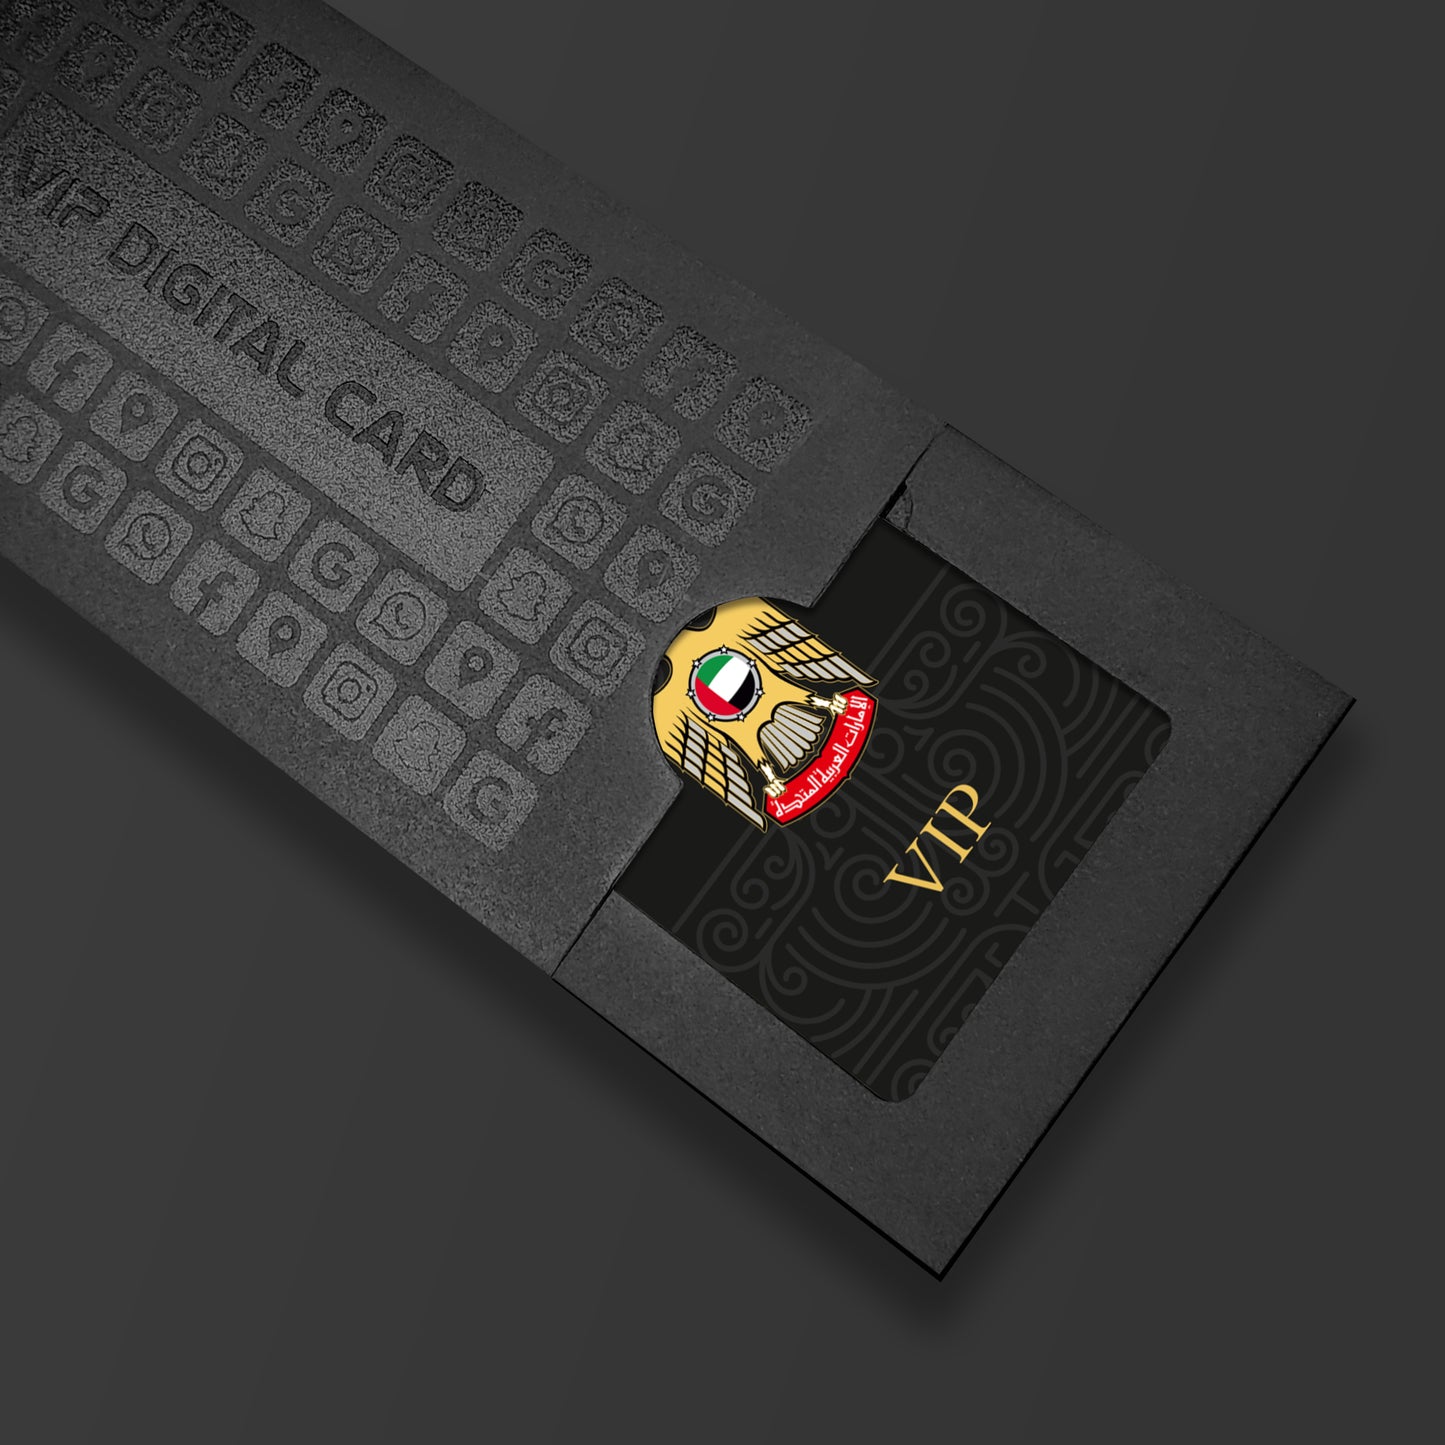 NFC Card VIP شعار دولة الإمارات